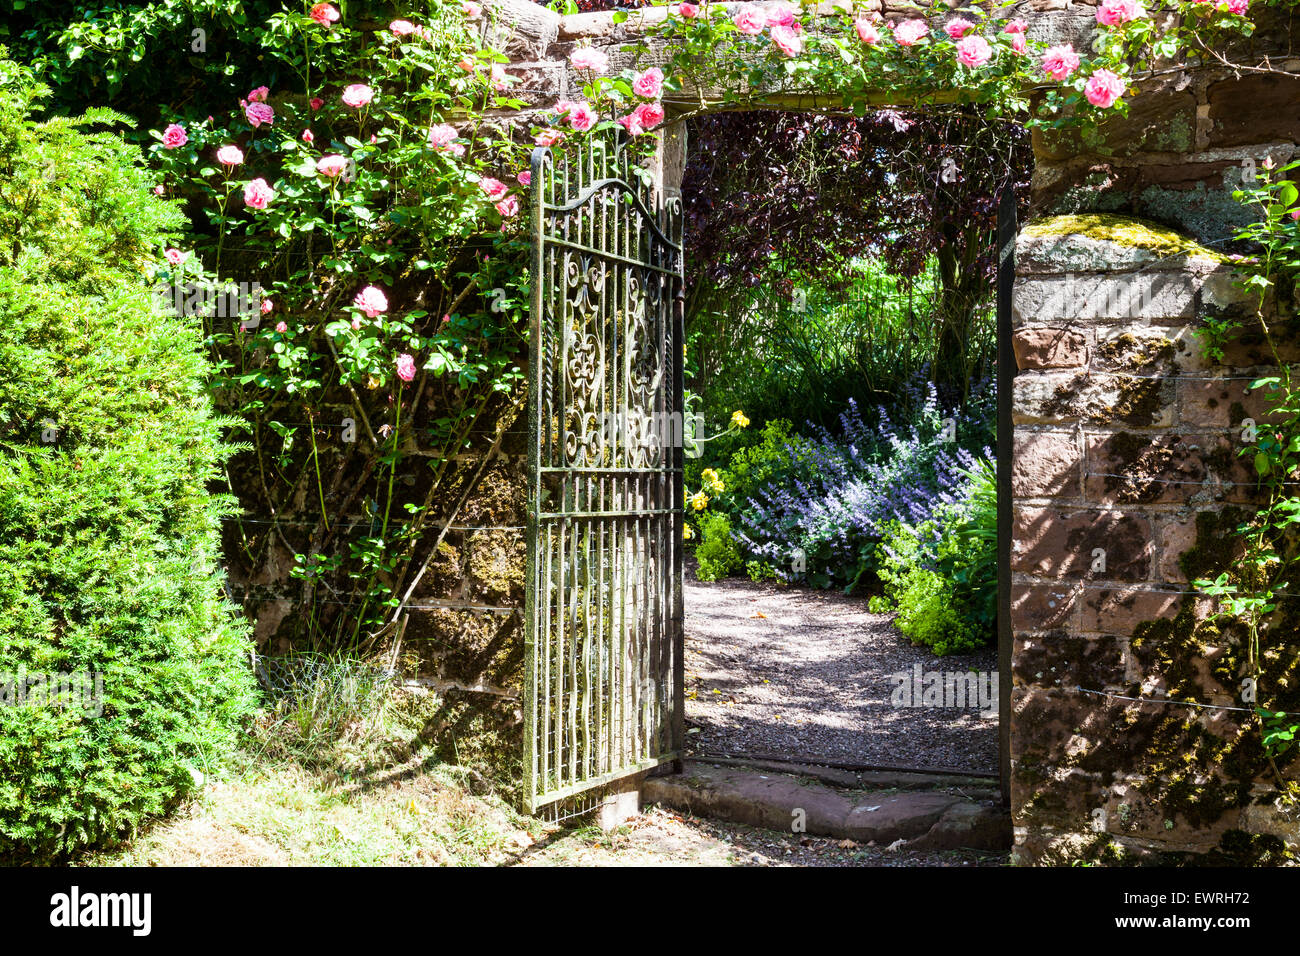 Open gate to the Tear-drop garden in Weston Park, Weston under Lizard, Shifnal, Shropshire, UK Stock Photo